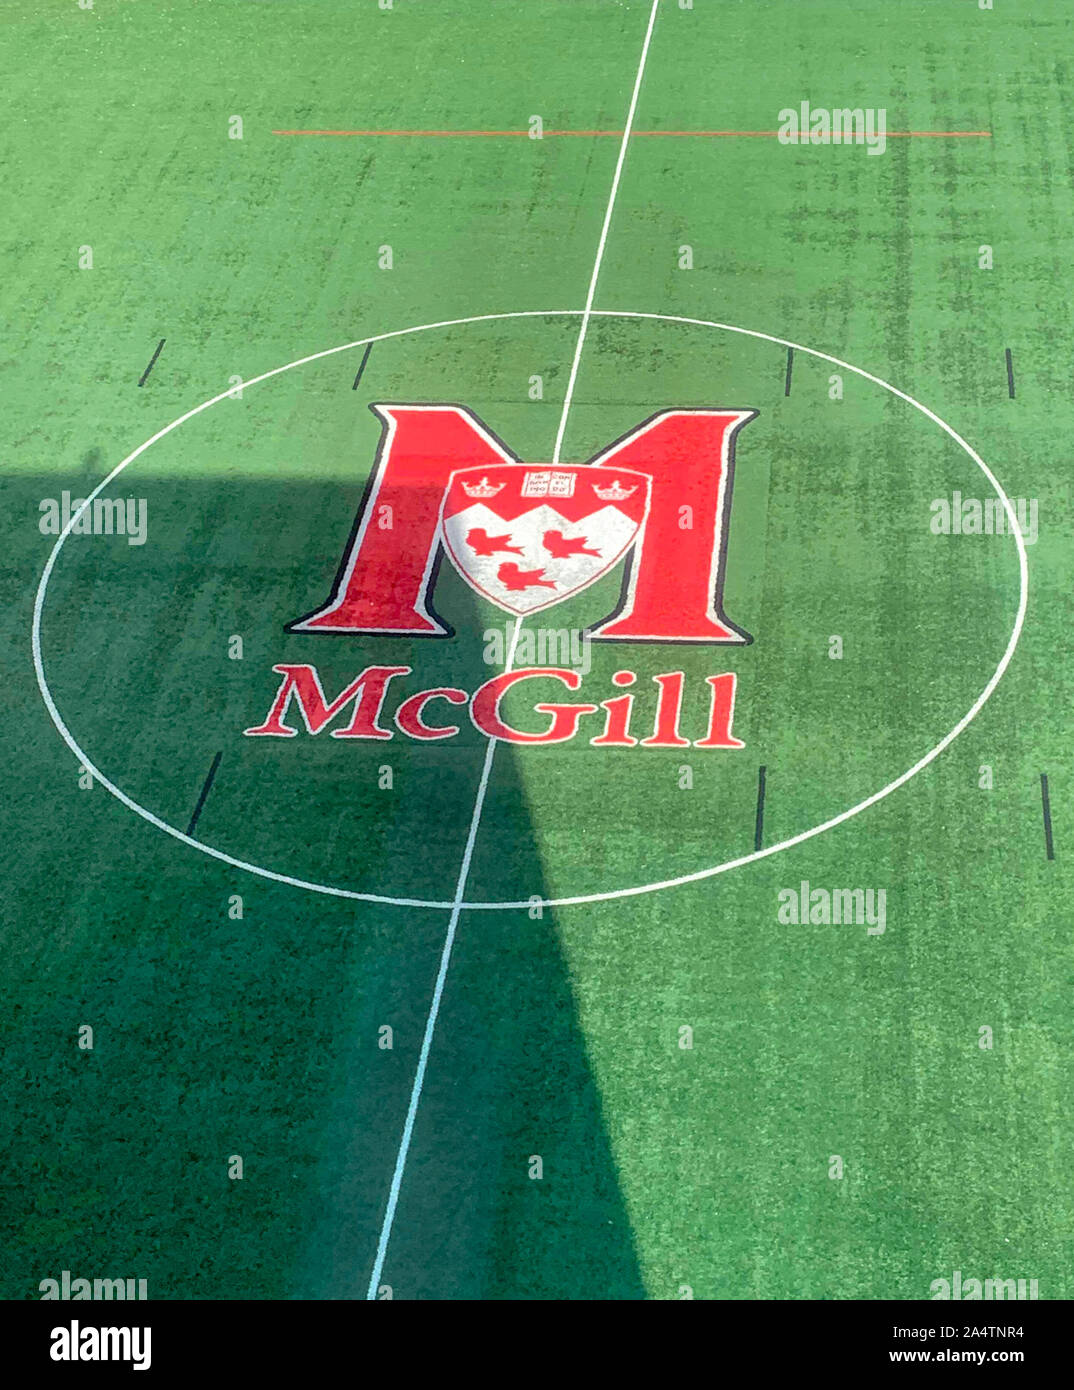 McGill university logo on the lawn of Percival Molson Memorial stadium in Montreal, Quebec, Canada Stock Photo